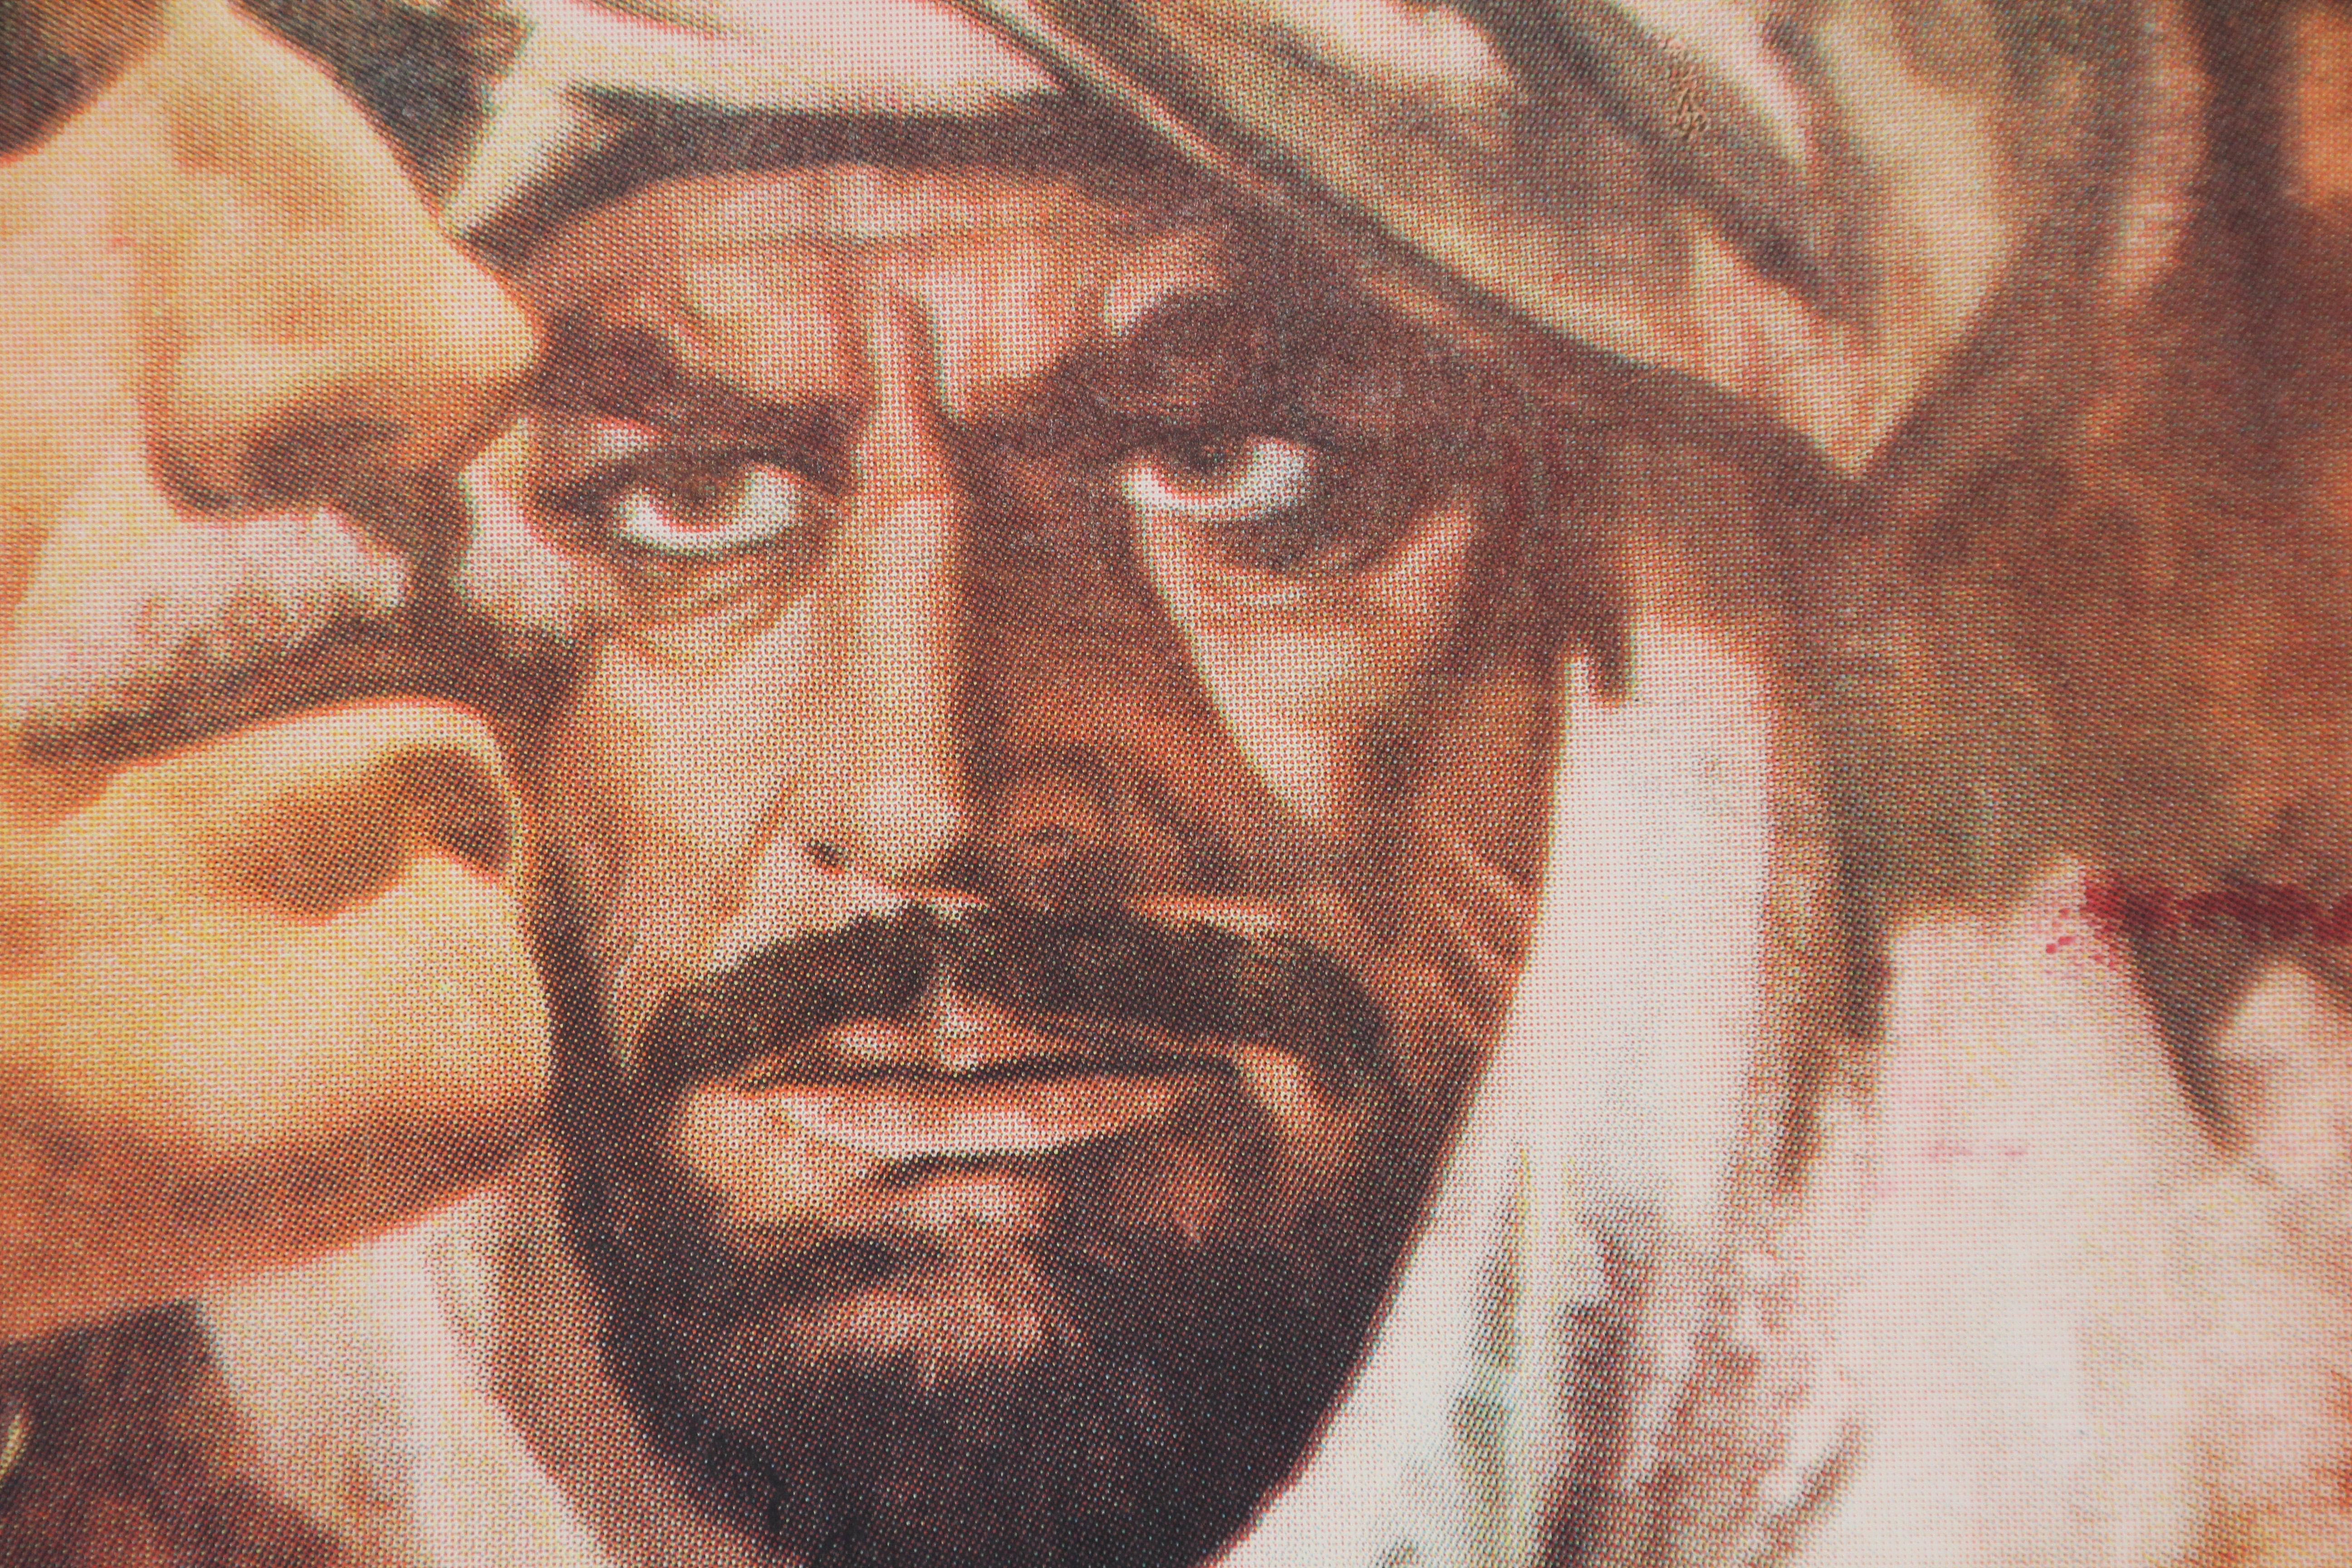 Khartoum, 1966 British Epic War Movie Poster in Spanish For Sale 4